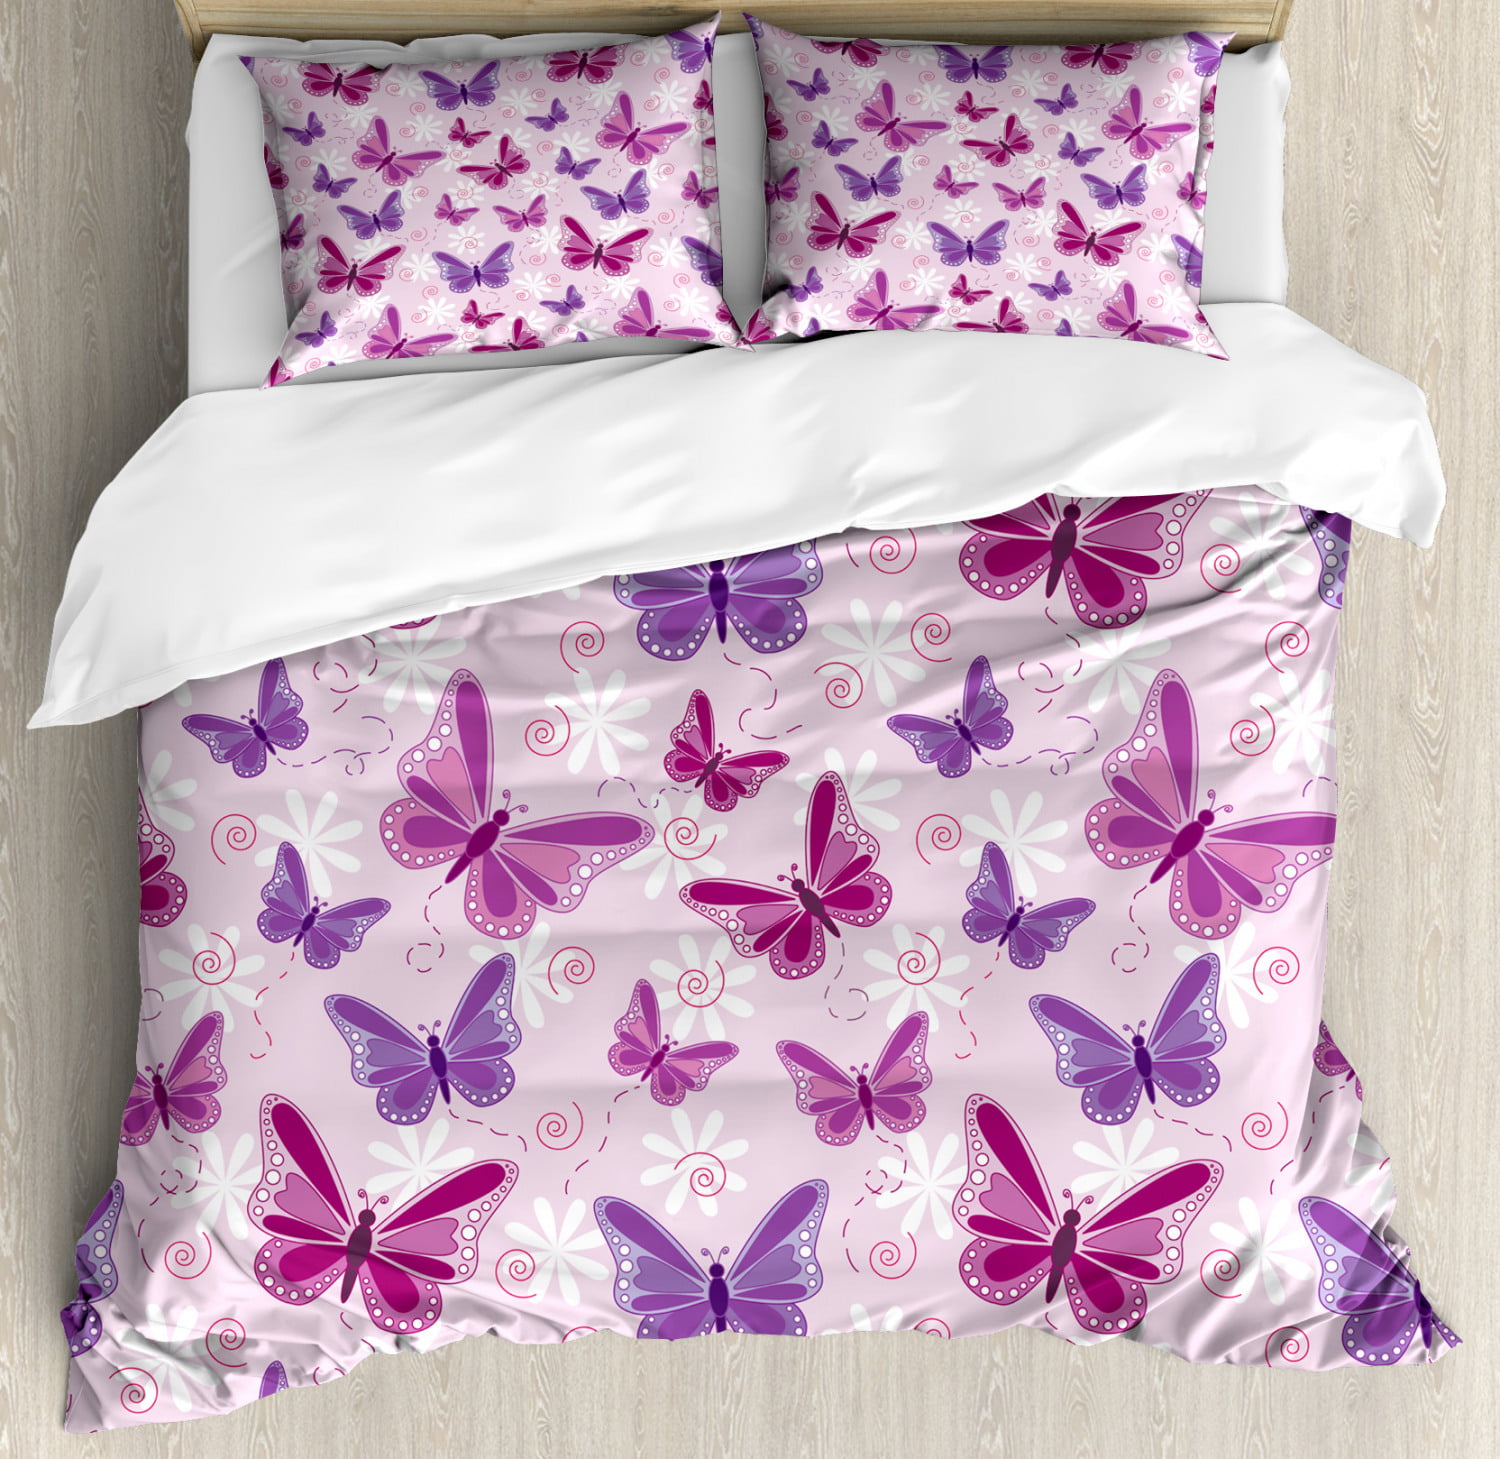 Butterfly Letters Pillow Sham Decorative Pillowcase 3 Sizes Bedroom Decoration 